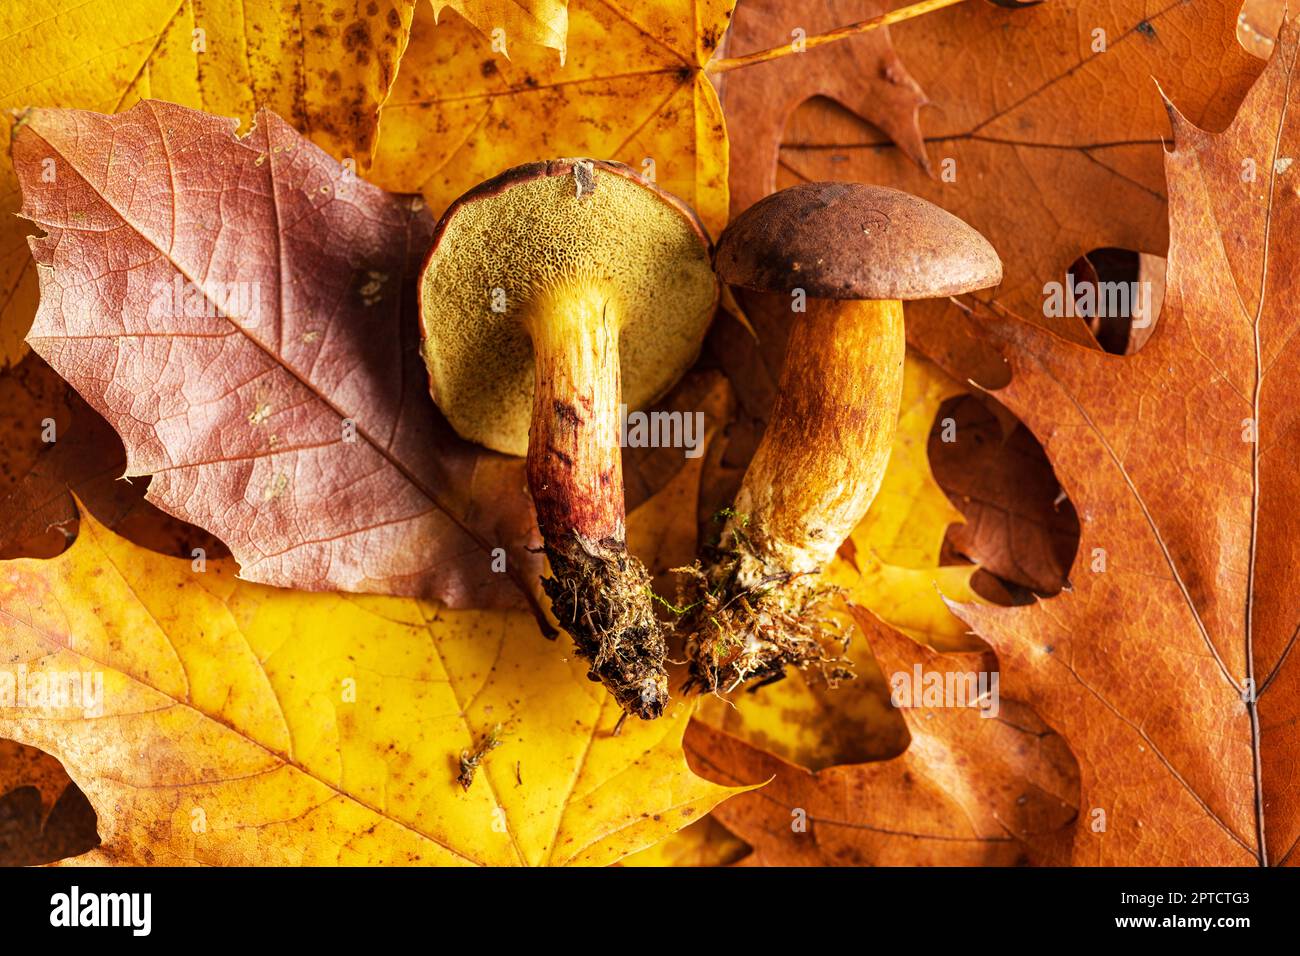 Autumn mushroom boletus on the leaves. Top view. Stock Photo